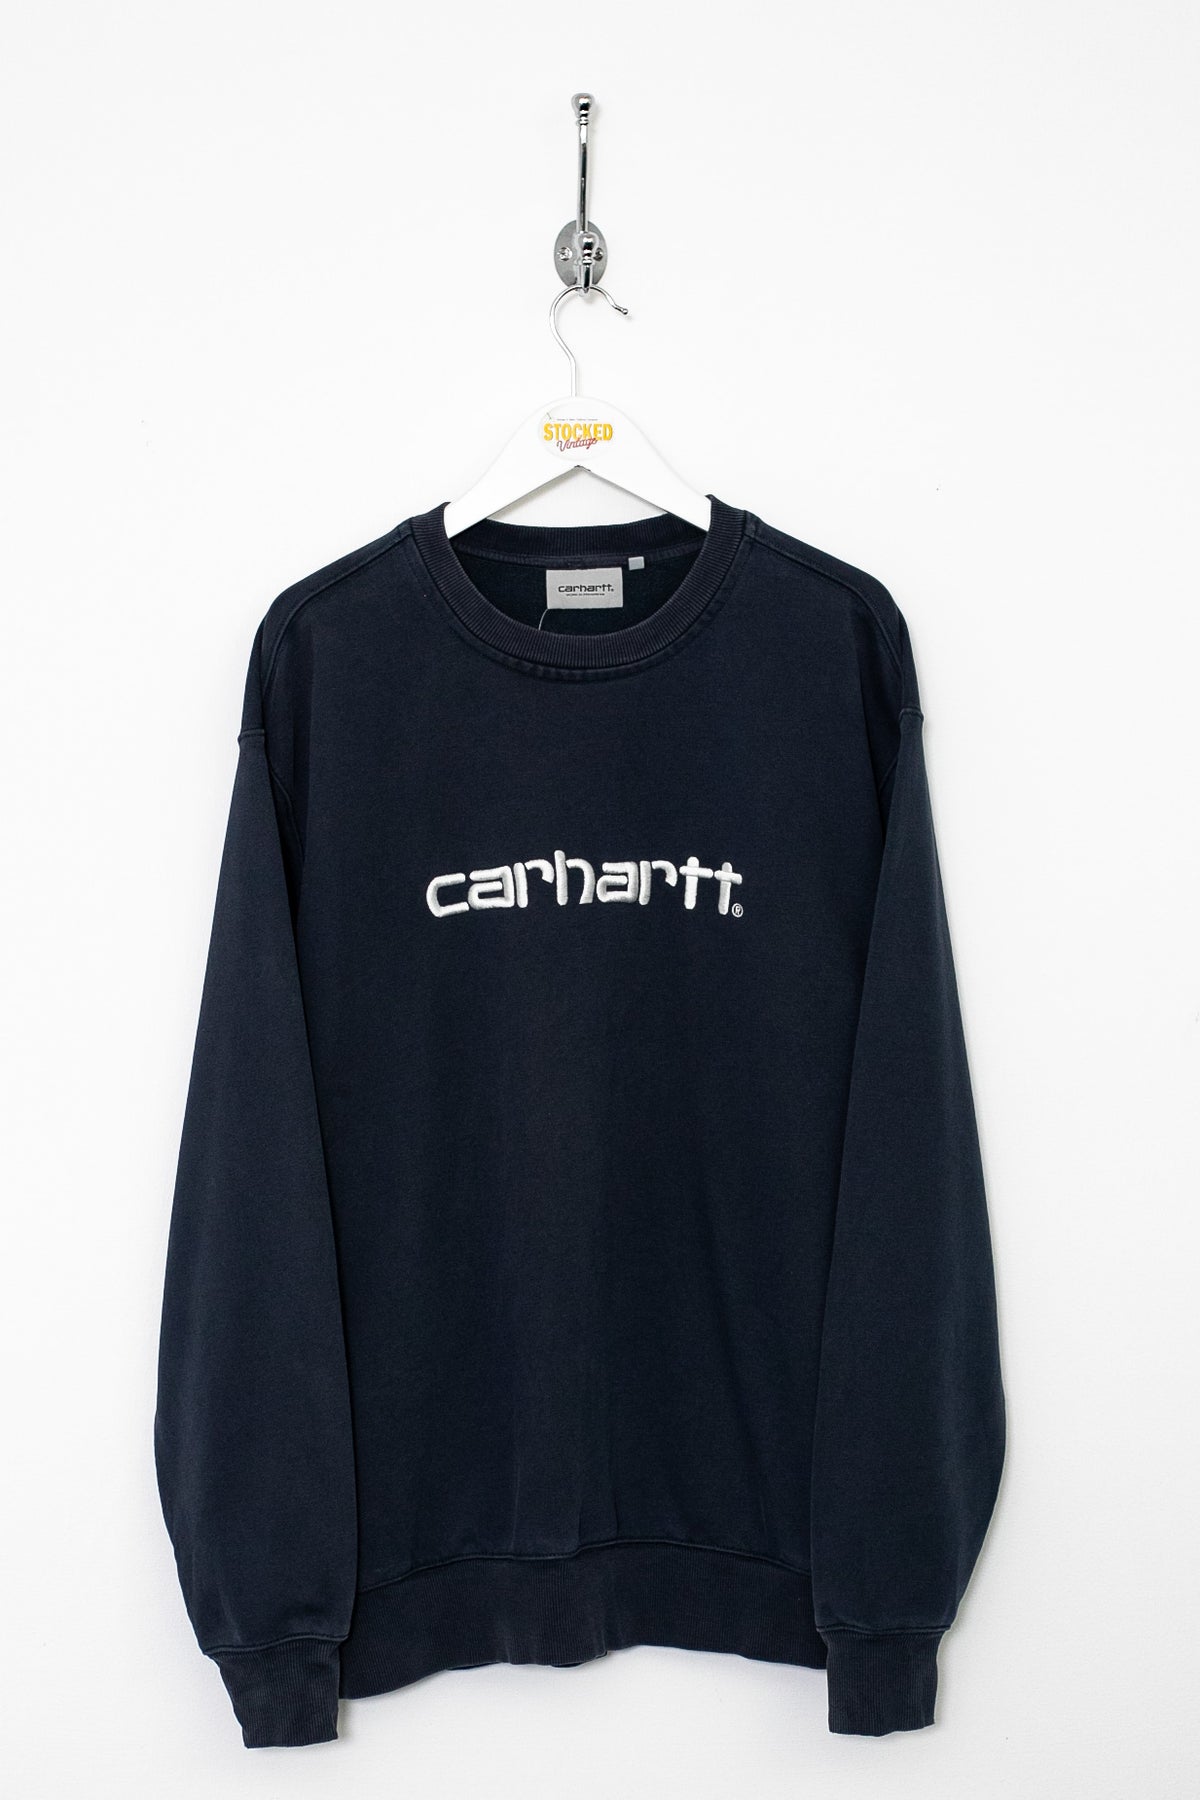 Carhartt Sweatshirt (M)